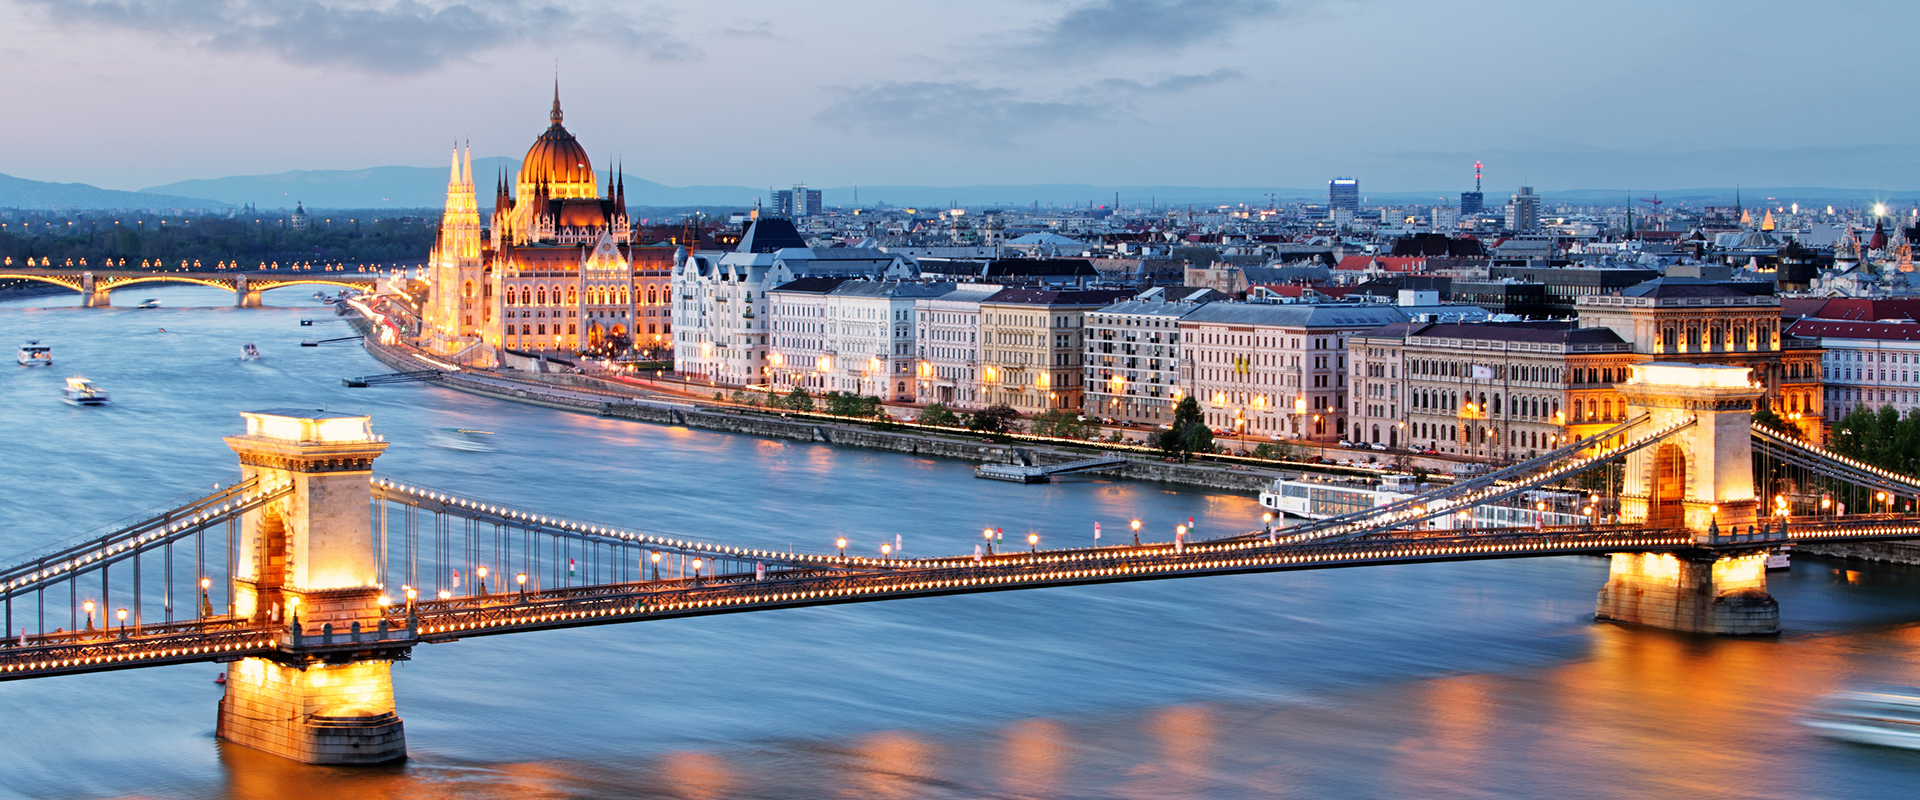 Budapest parliament and bridge in twilight